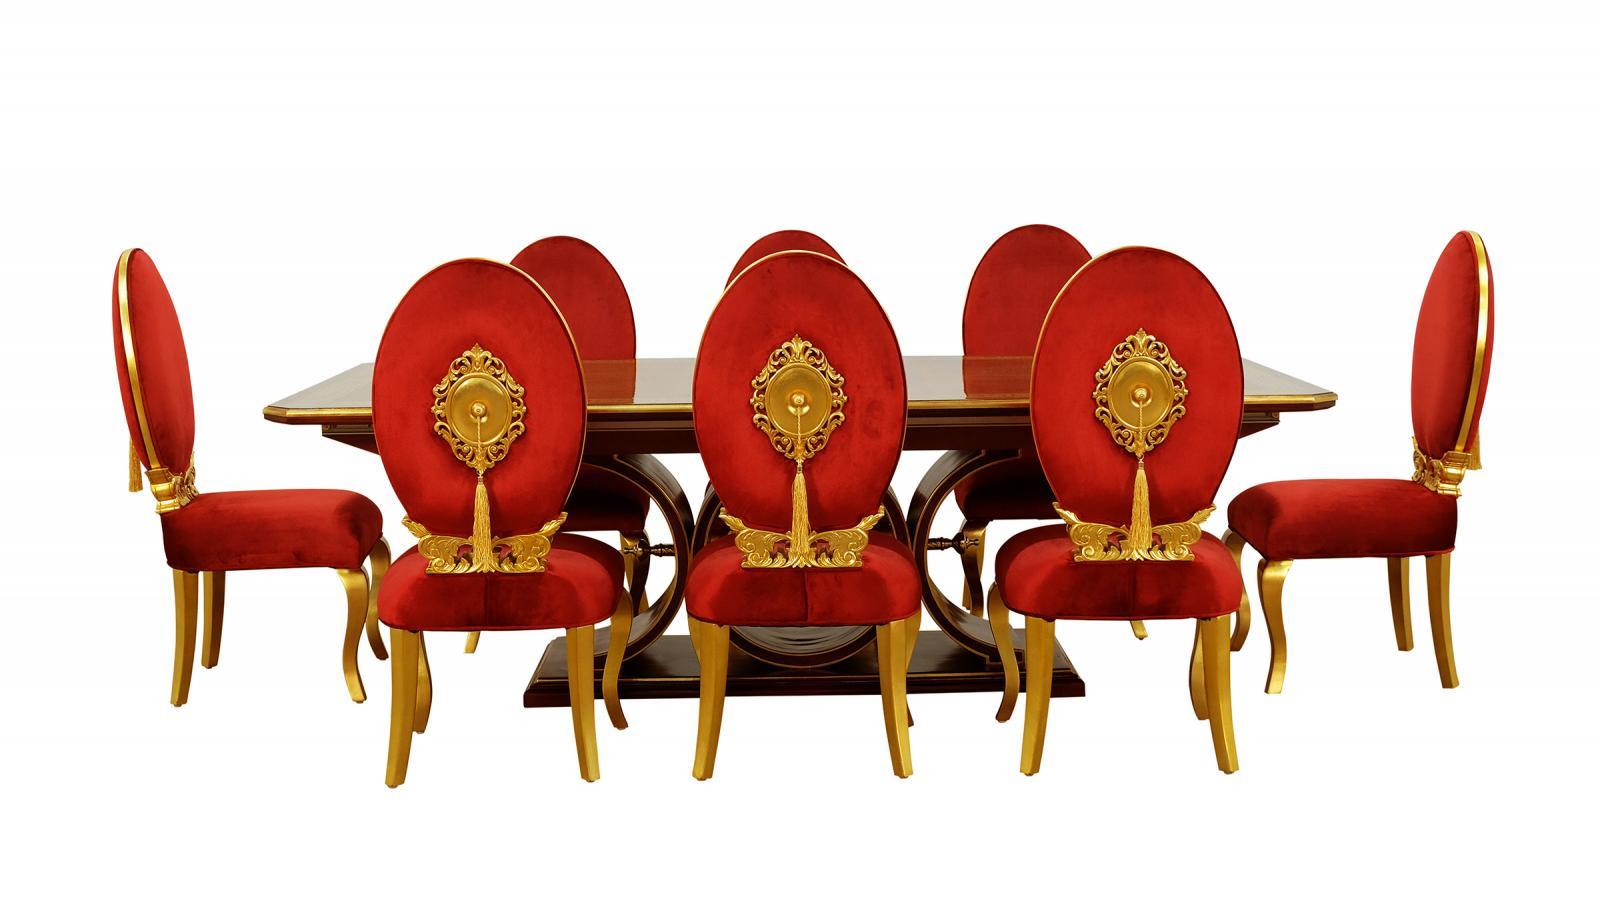 

    
Luxury Red & Gold LUXOR Velvet Dining Chair 2Pcs EUROPEAN FURNITURE Classic
